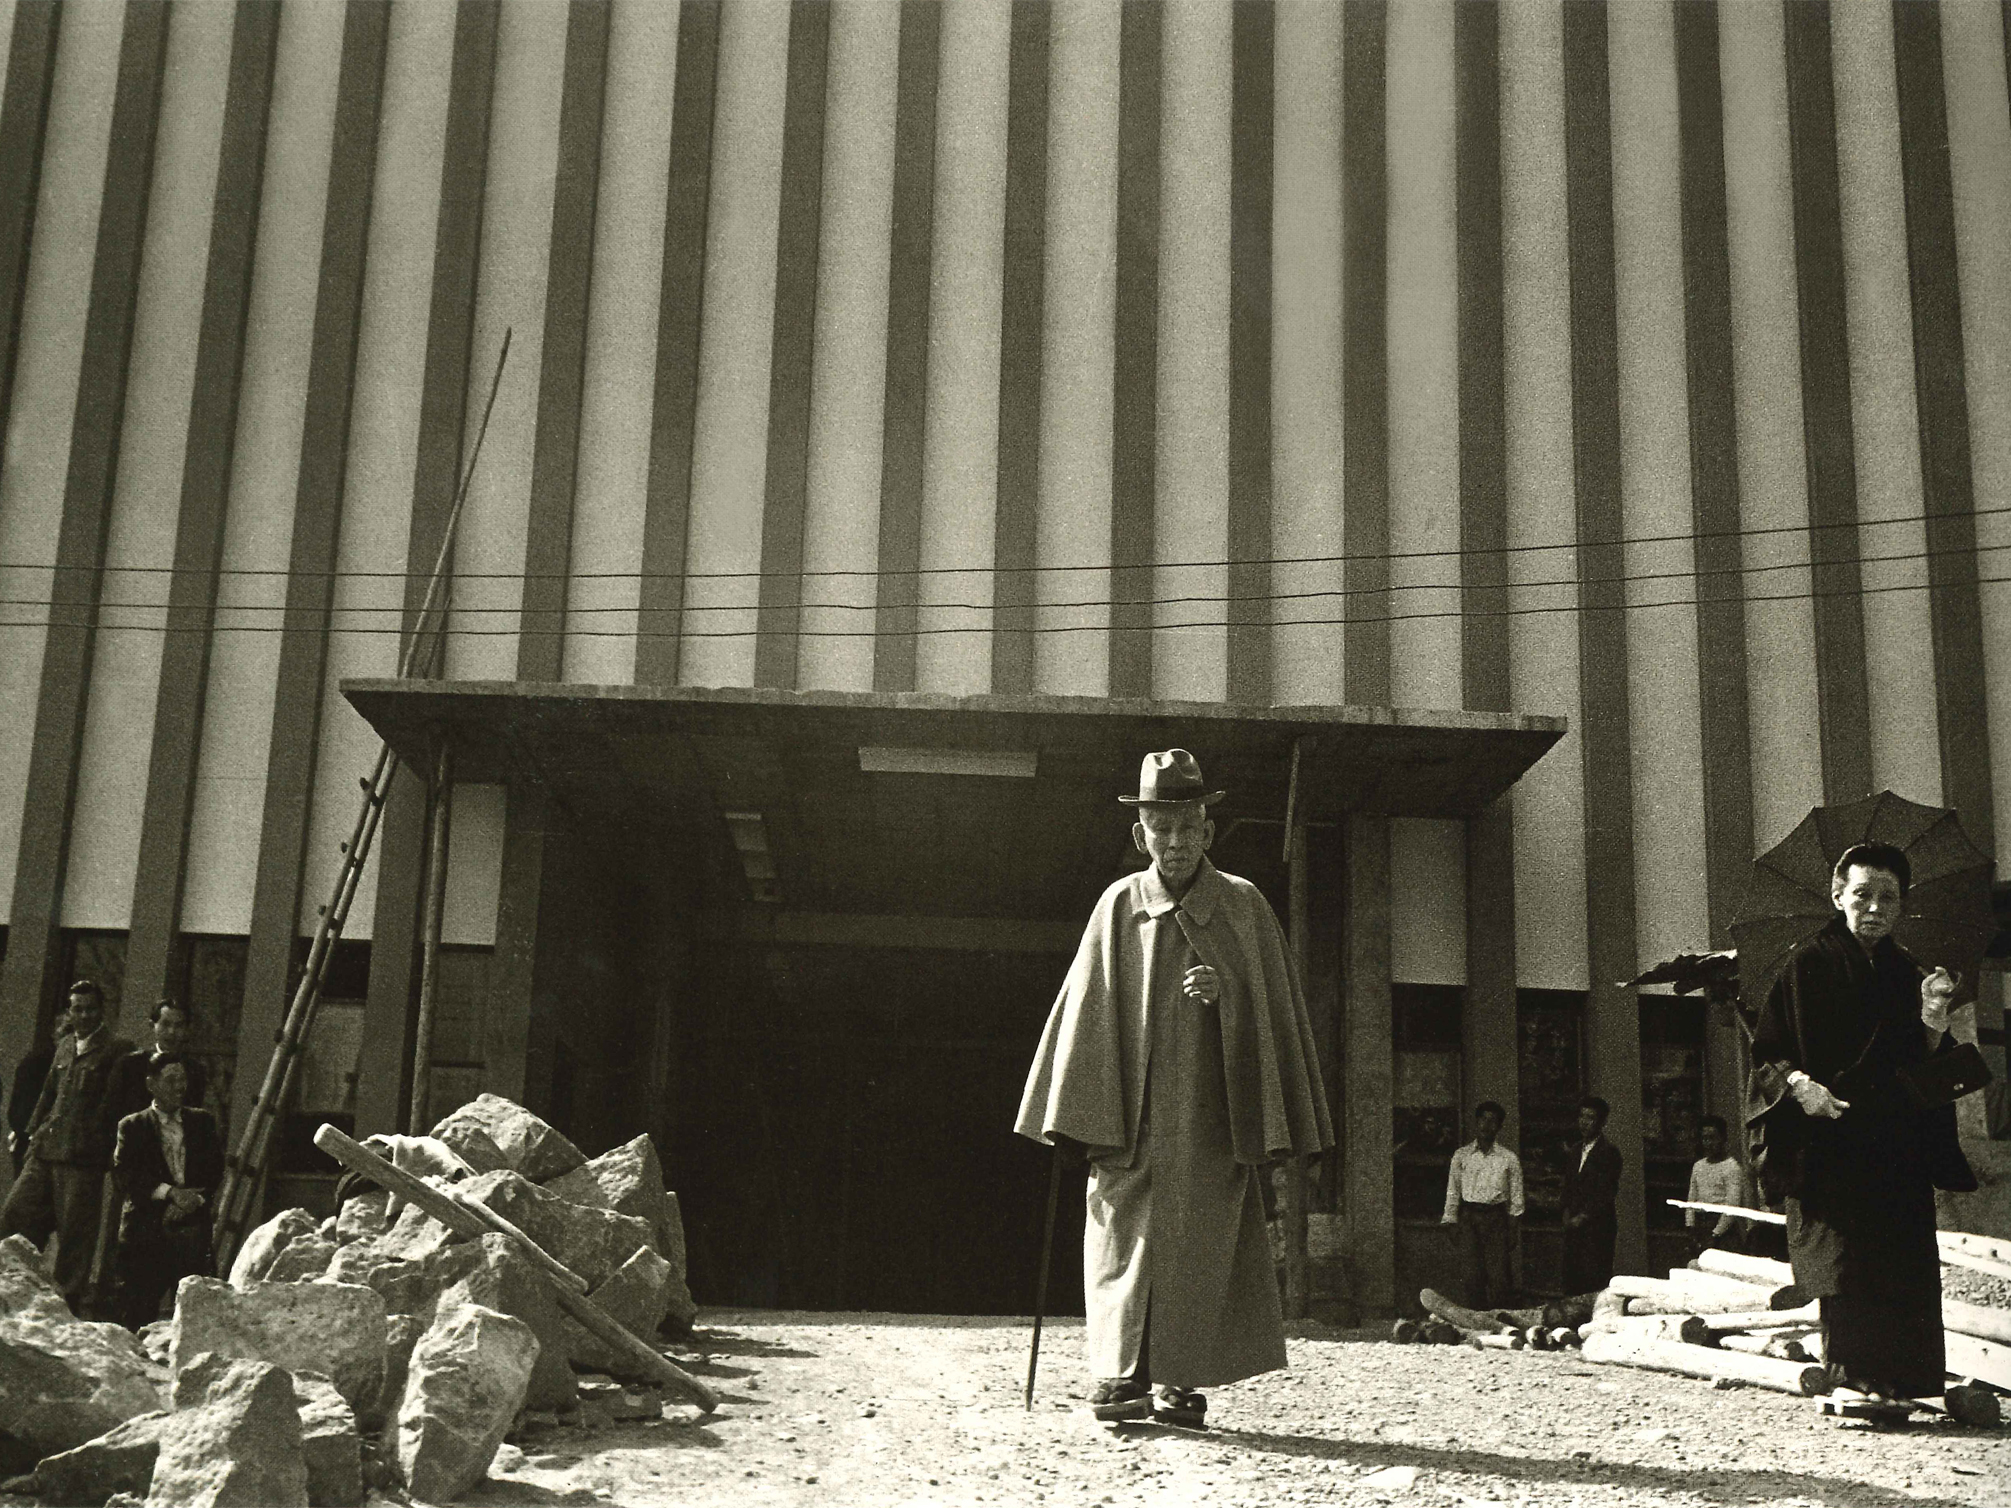 Okada in front of the old Meshiya Kaikan (April 3, 1954)